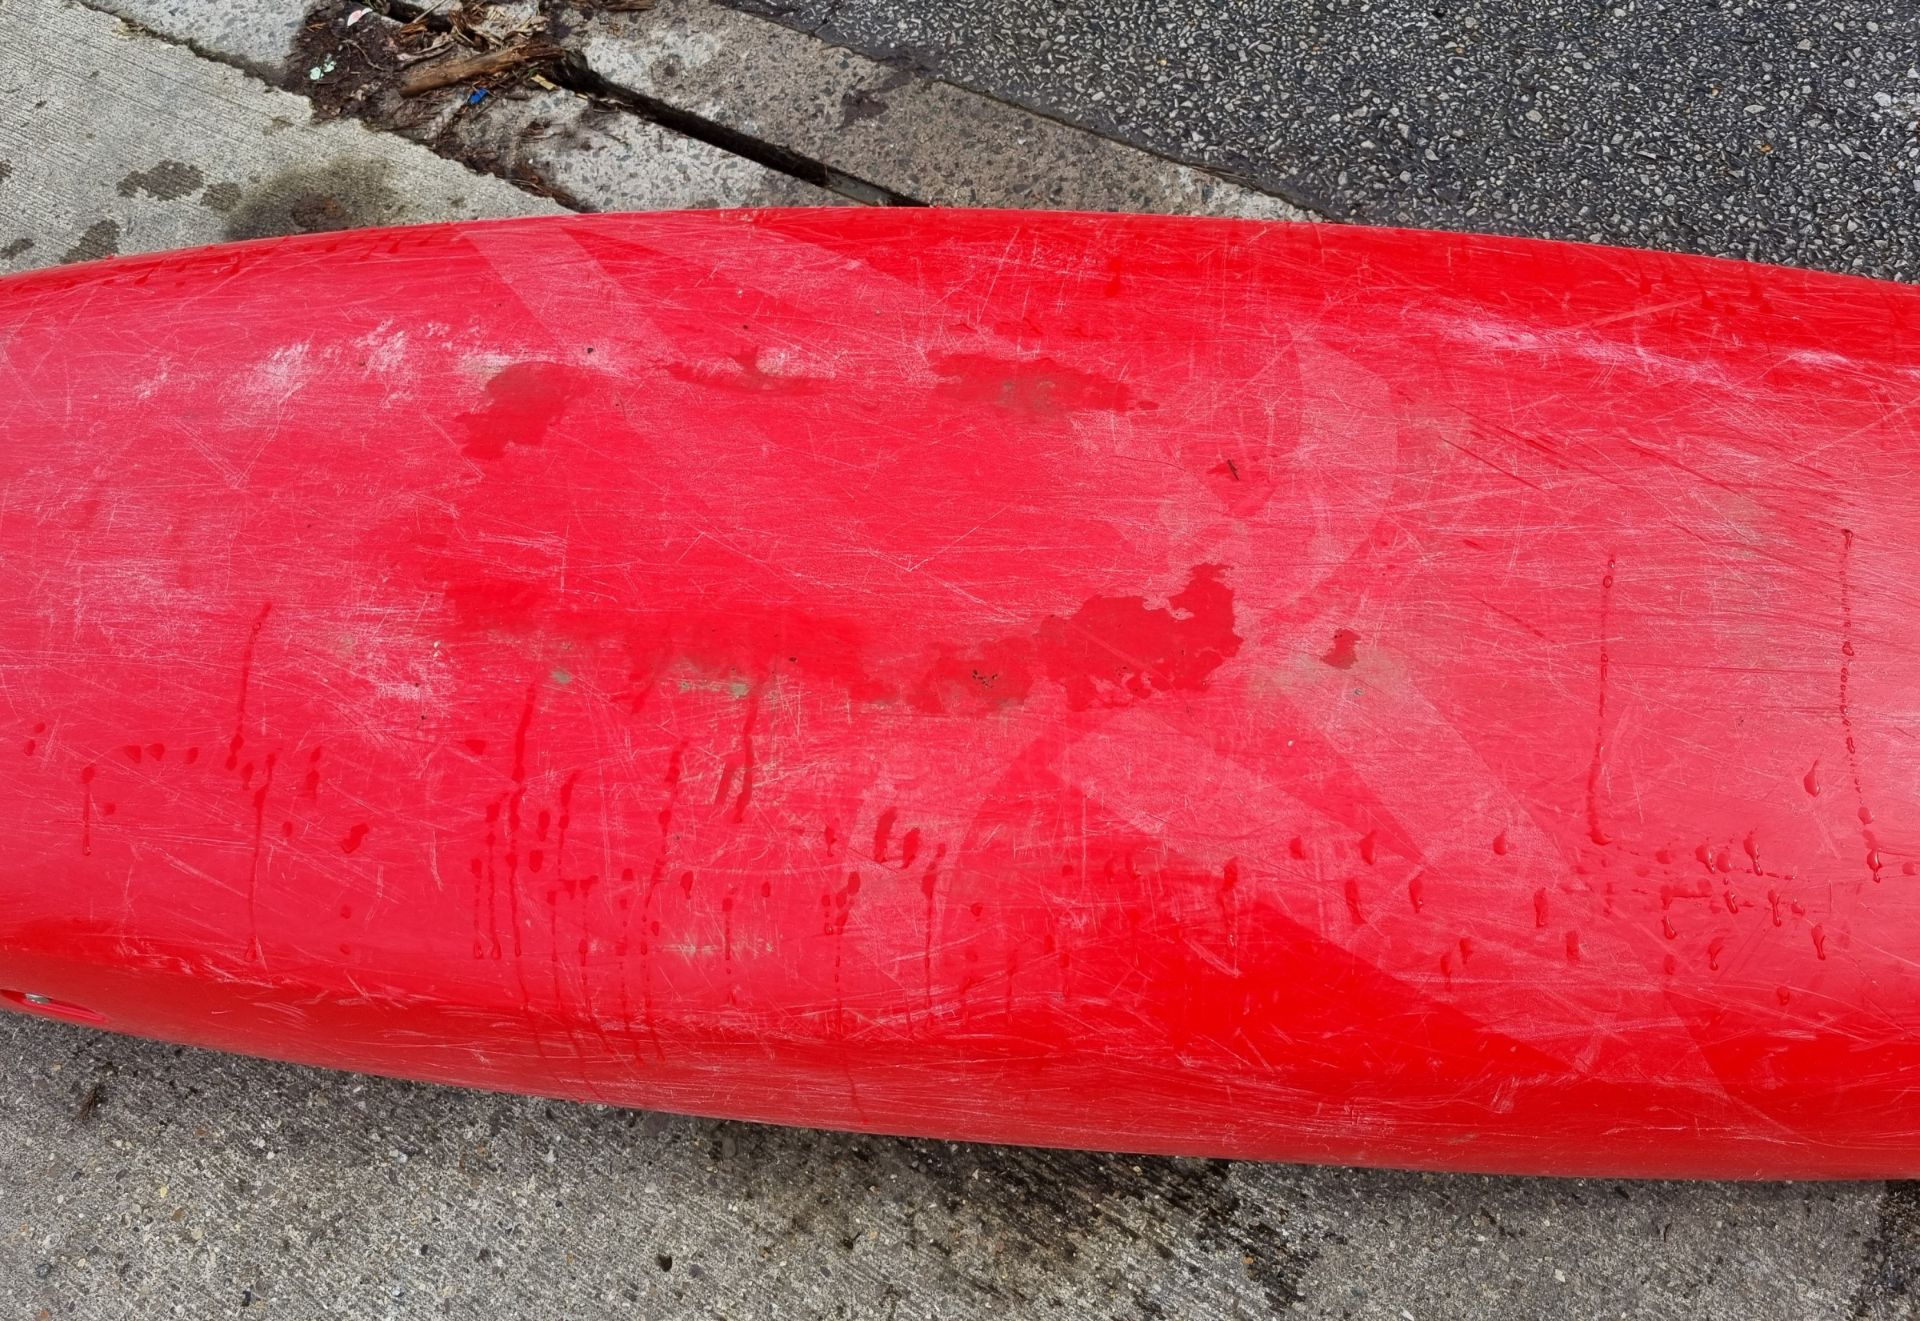 Dagger Katana polyethylene kayak - red - W 3200 x D 660 x H 420mm - Image 8 of 9